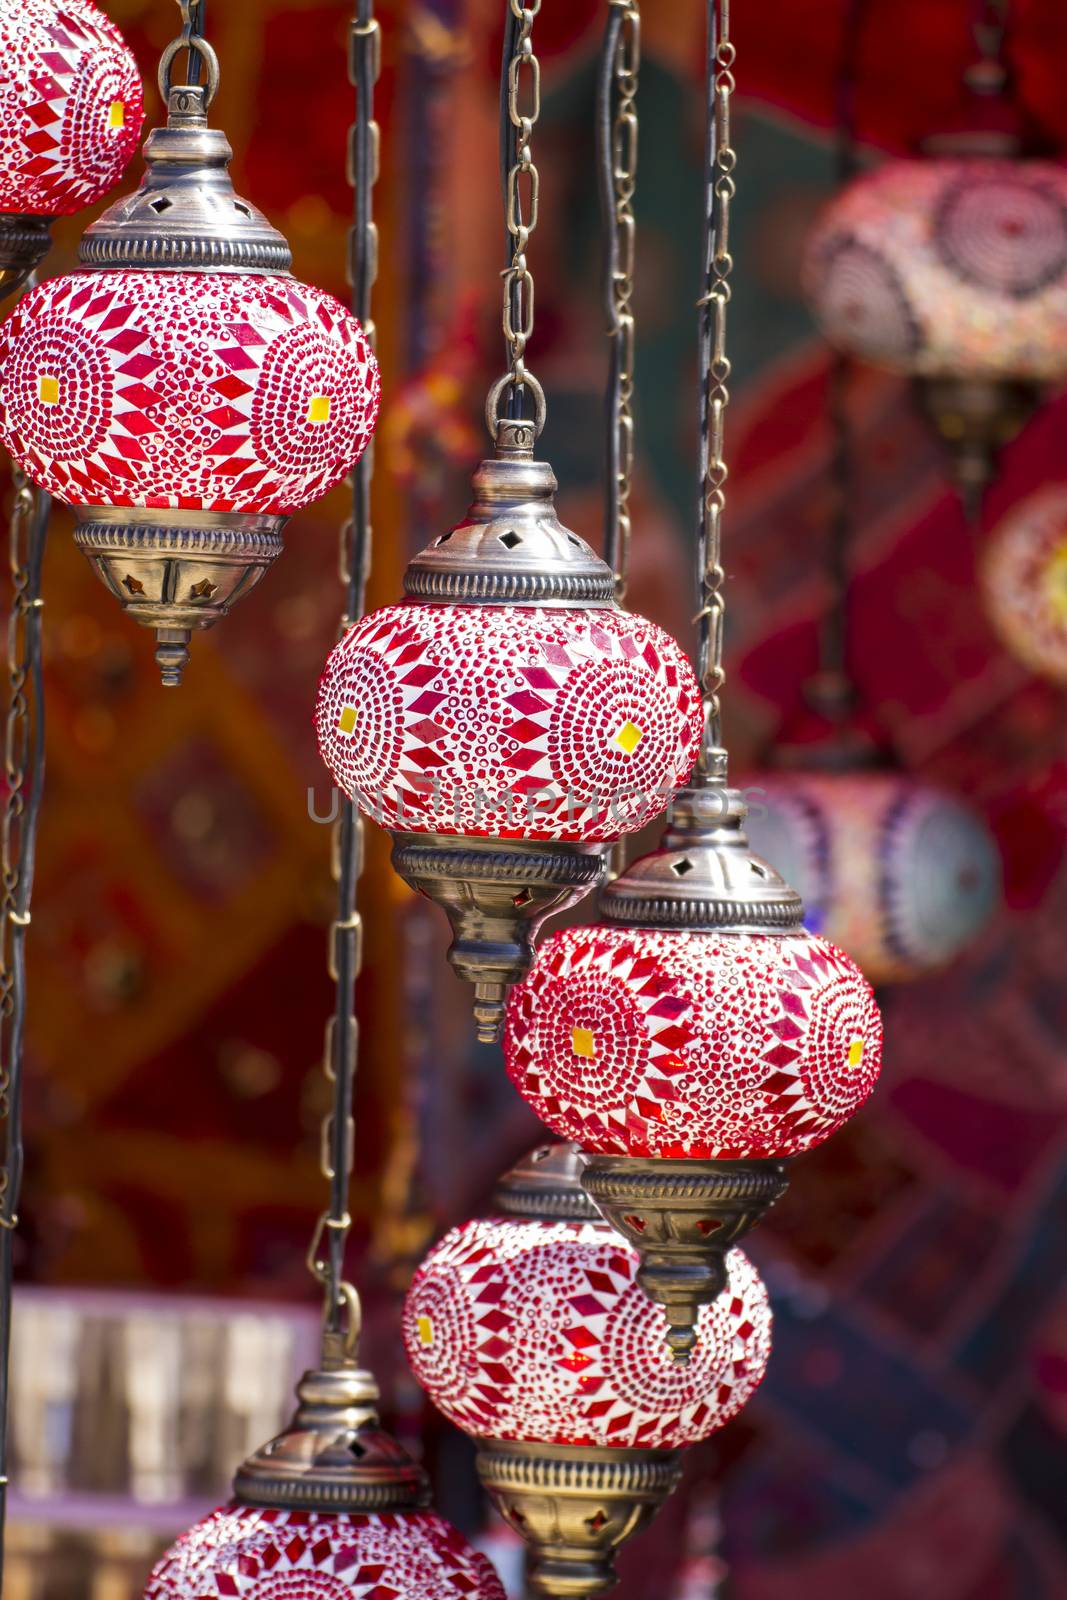 Shop, Oriental style lamps craft in a bazaar by FernandoCortes